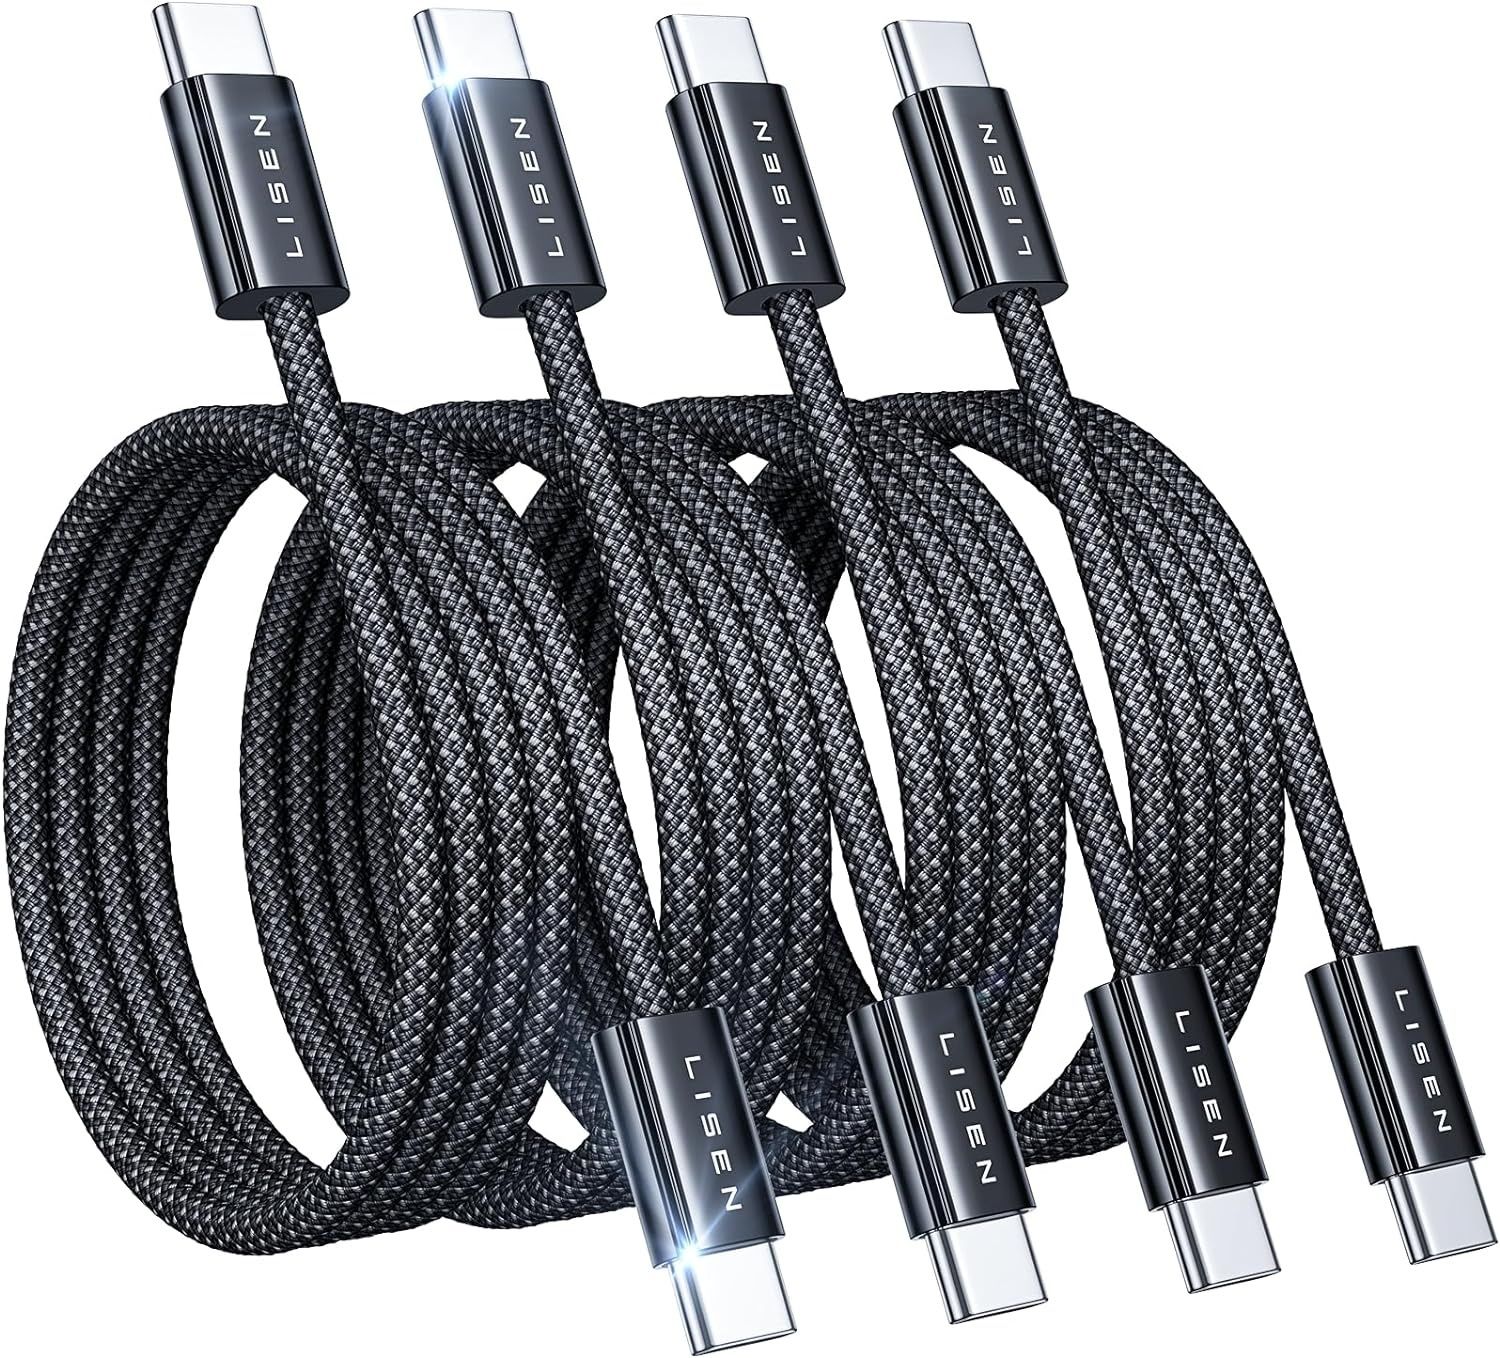 Kabel LISEN 60 W USB C, 4 sztuki 0.5 M, 2x 1M 2 M